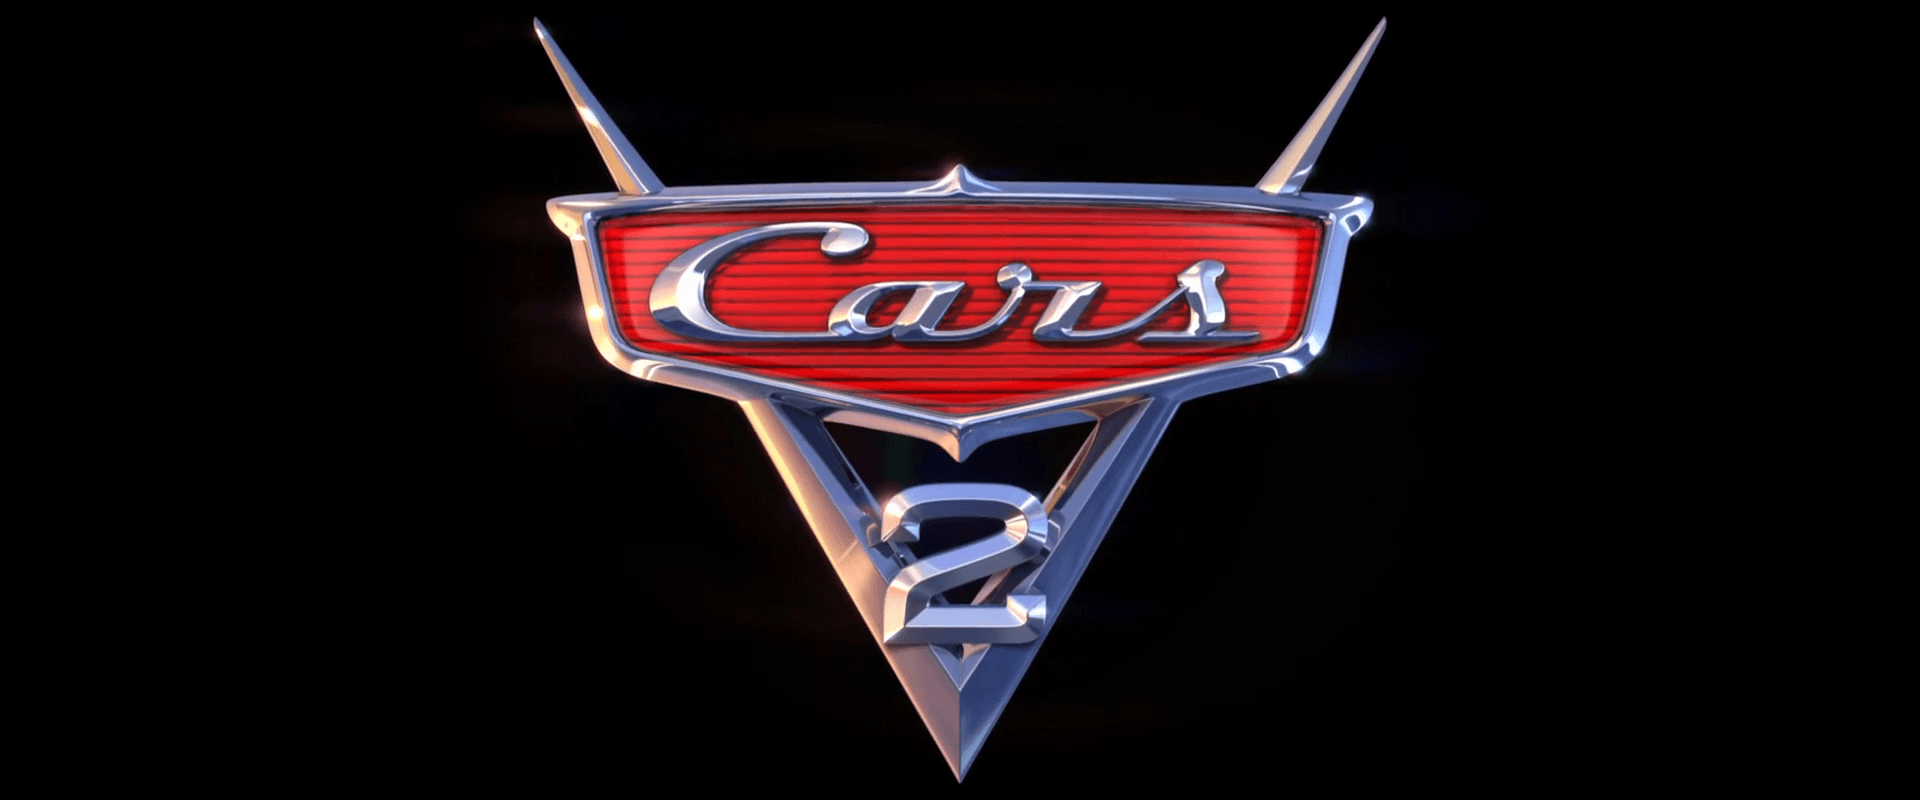 Cars 2 Logo - Cars 2 logo png PNG Image